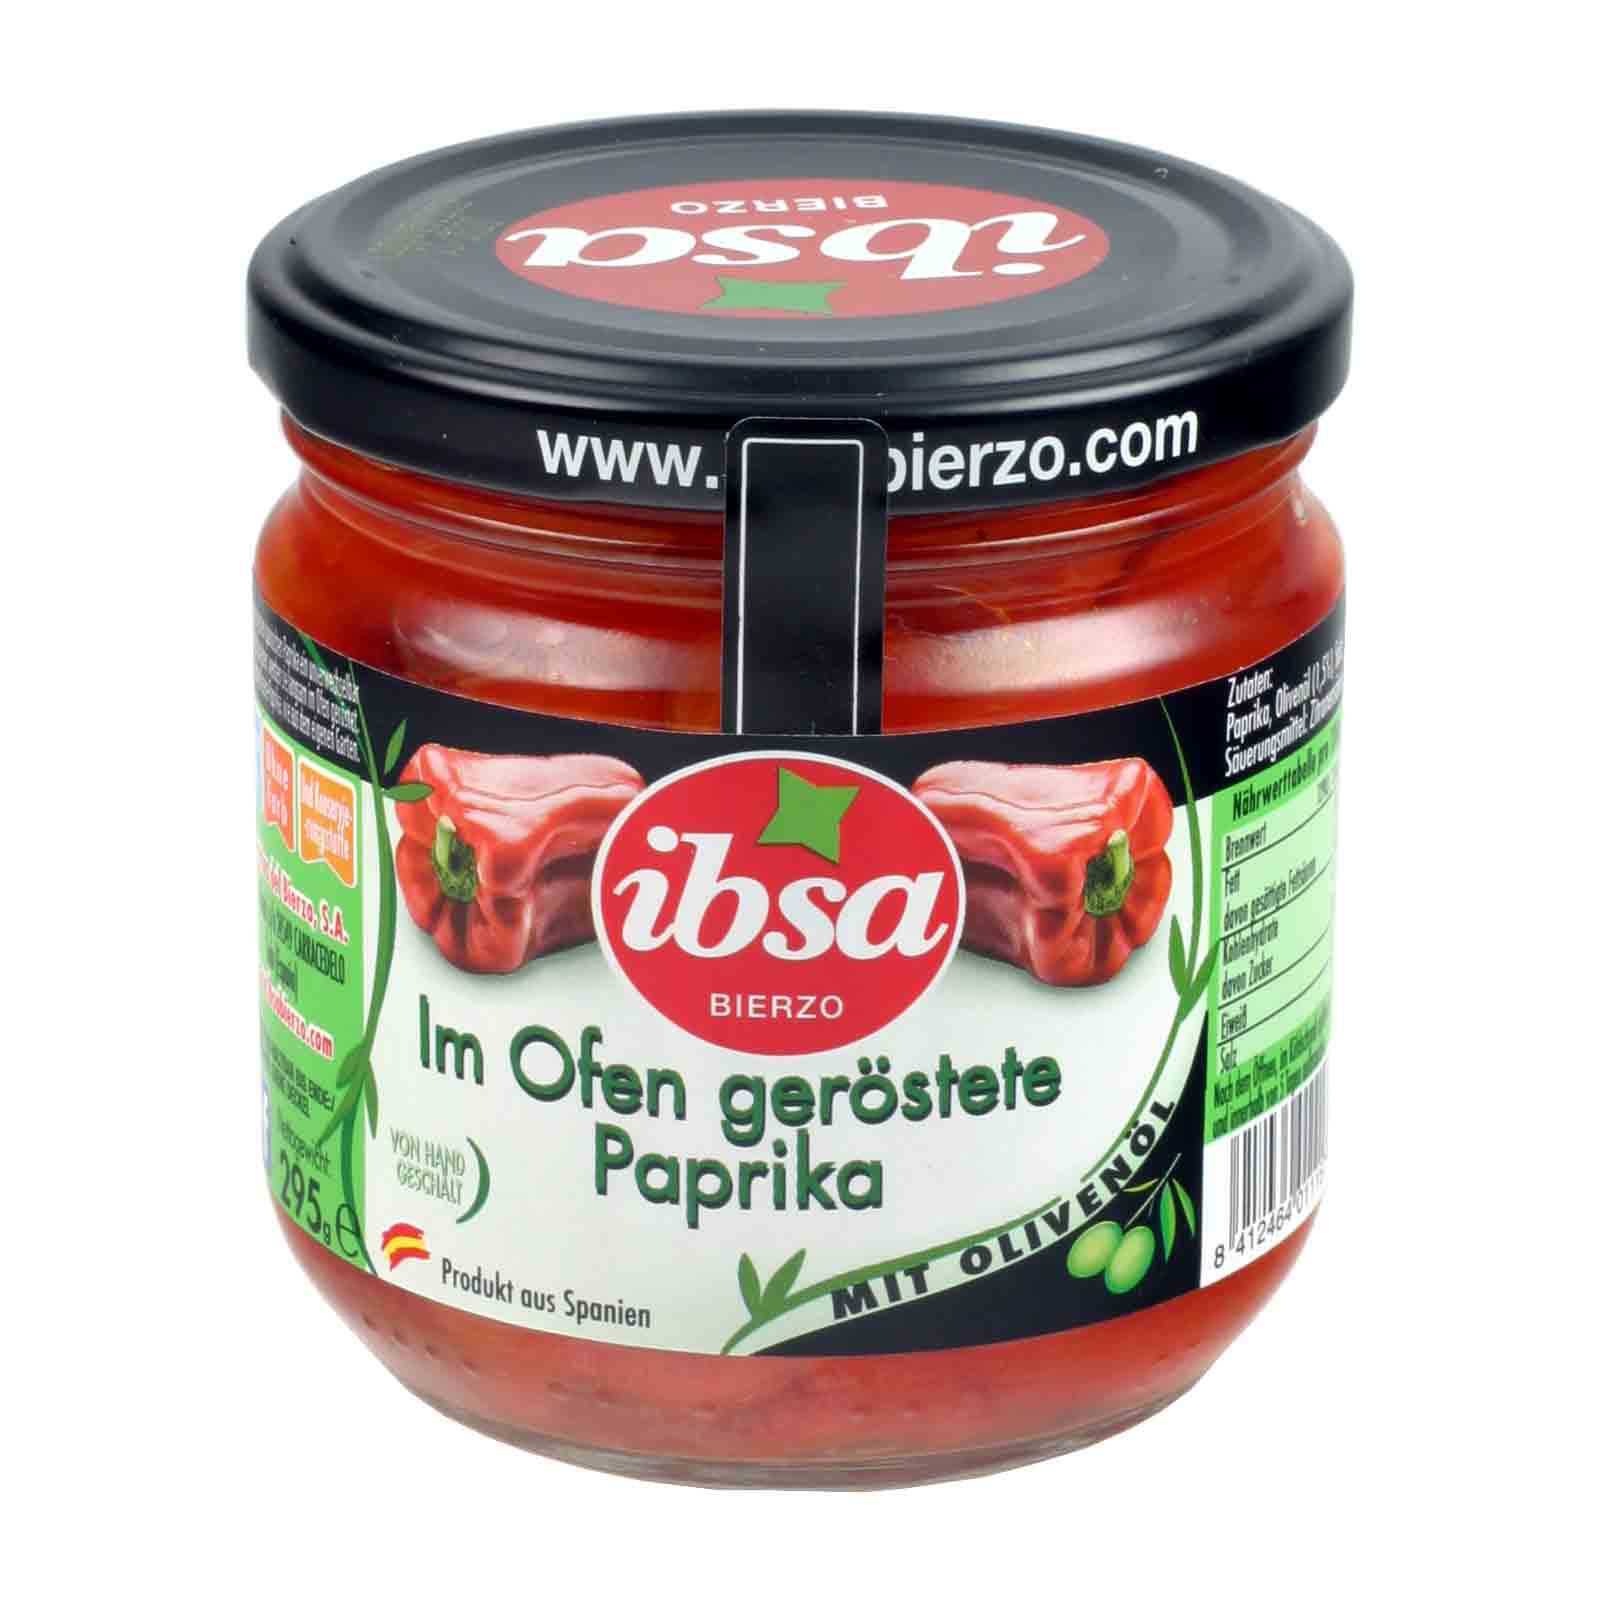 Im Ofen geröstete Paprika mit Olivenöl - 295g | uborn.de - feurig ...